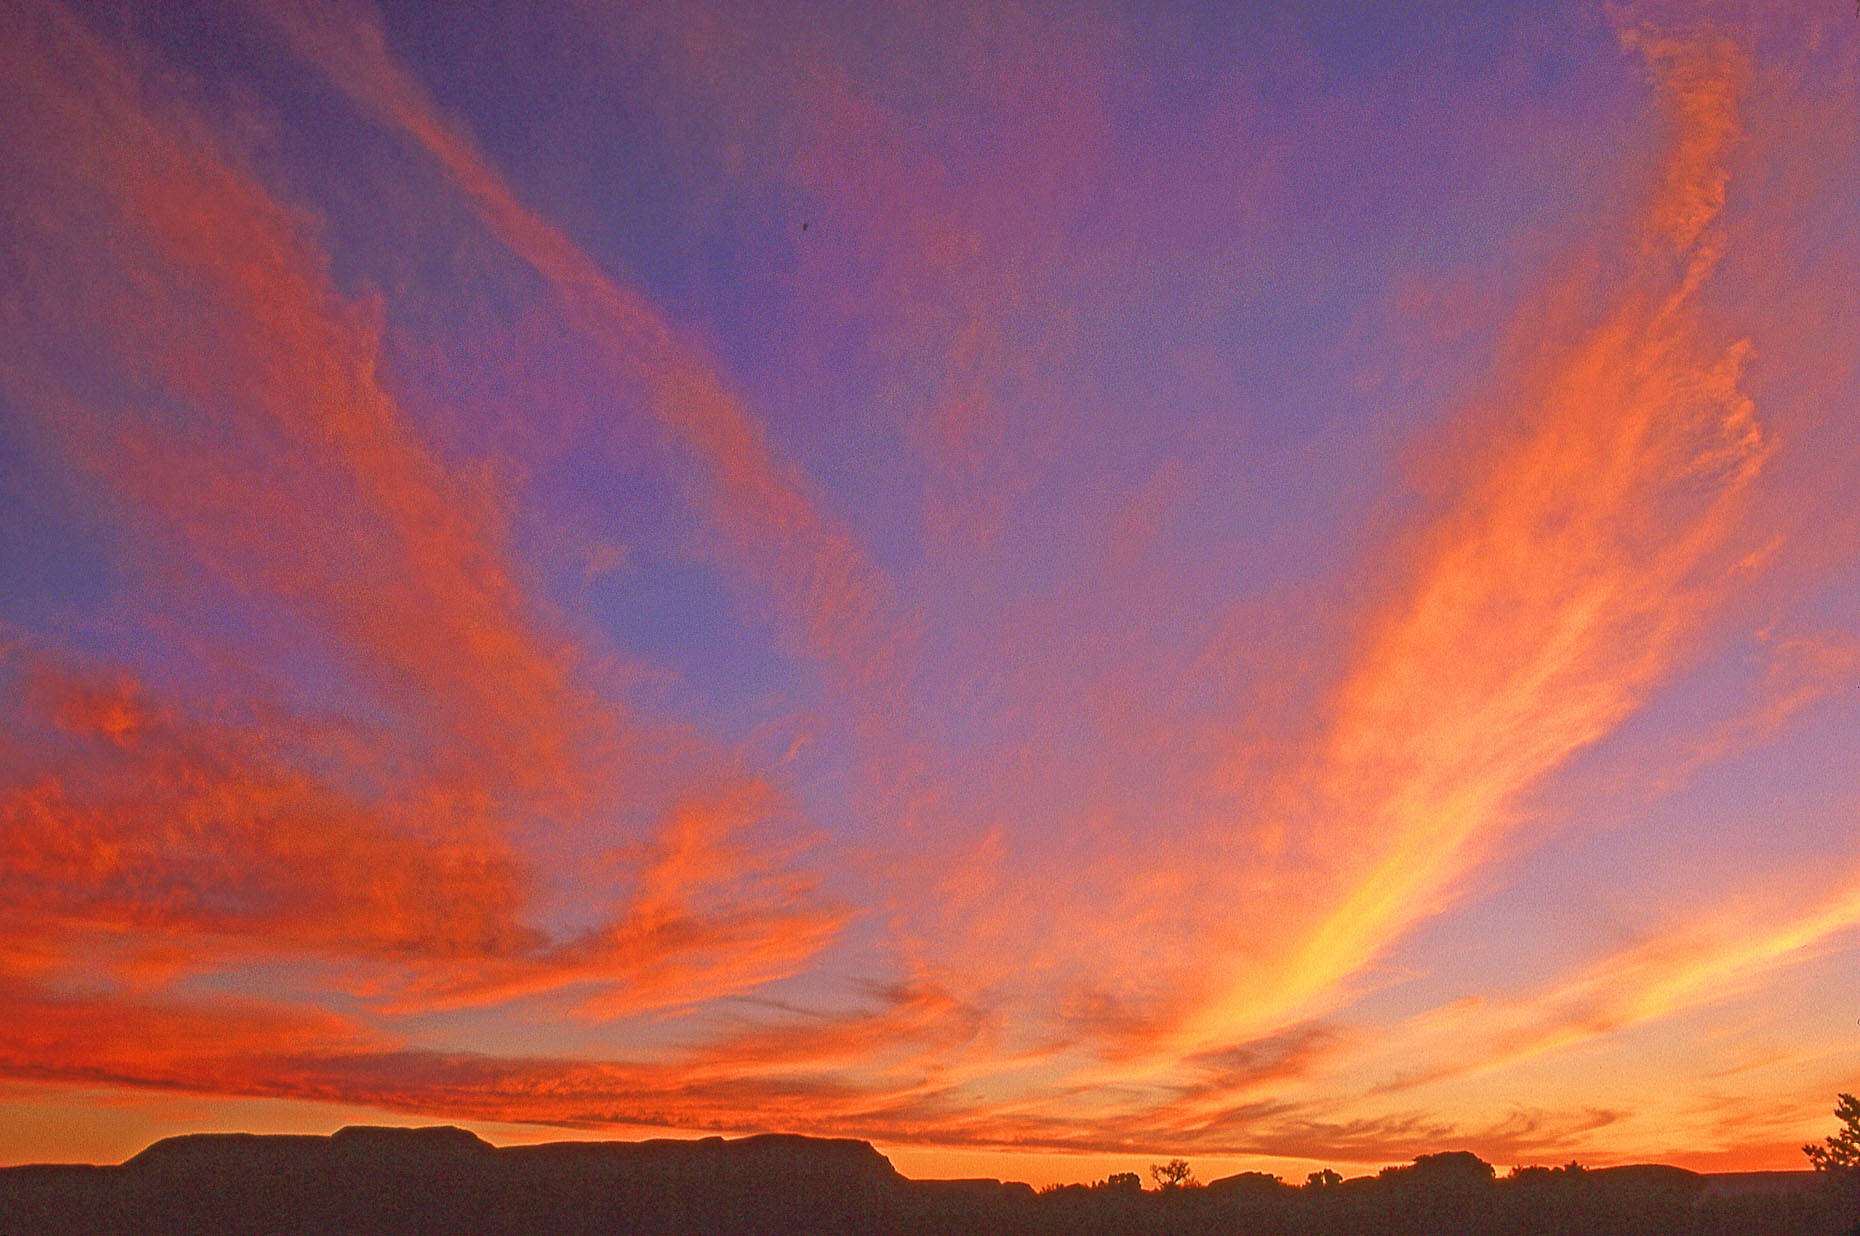 Sunset, Grand Canyon-Parashant National Monument, John Annerino, AZ